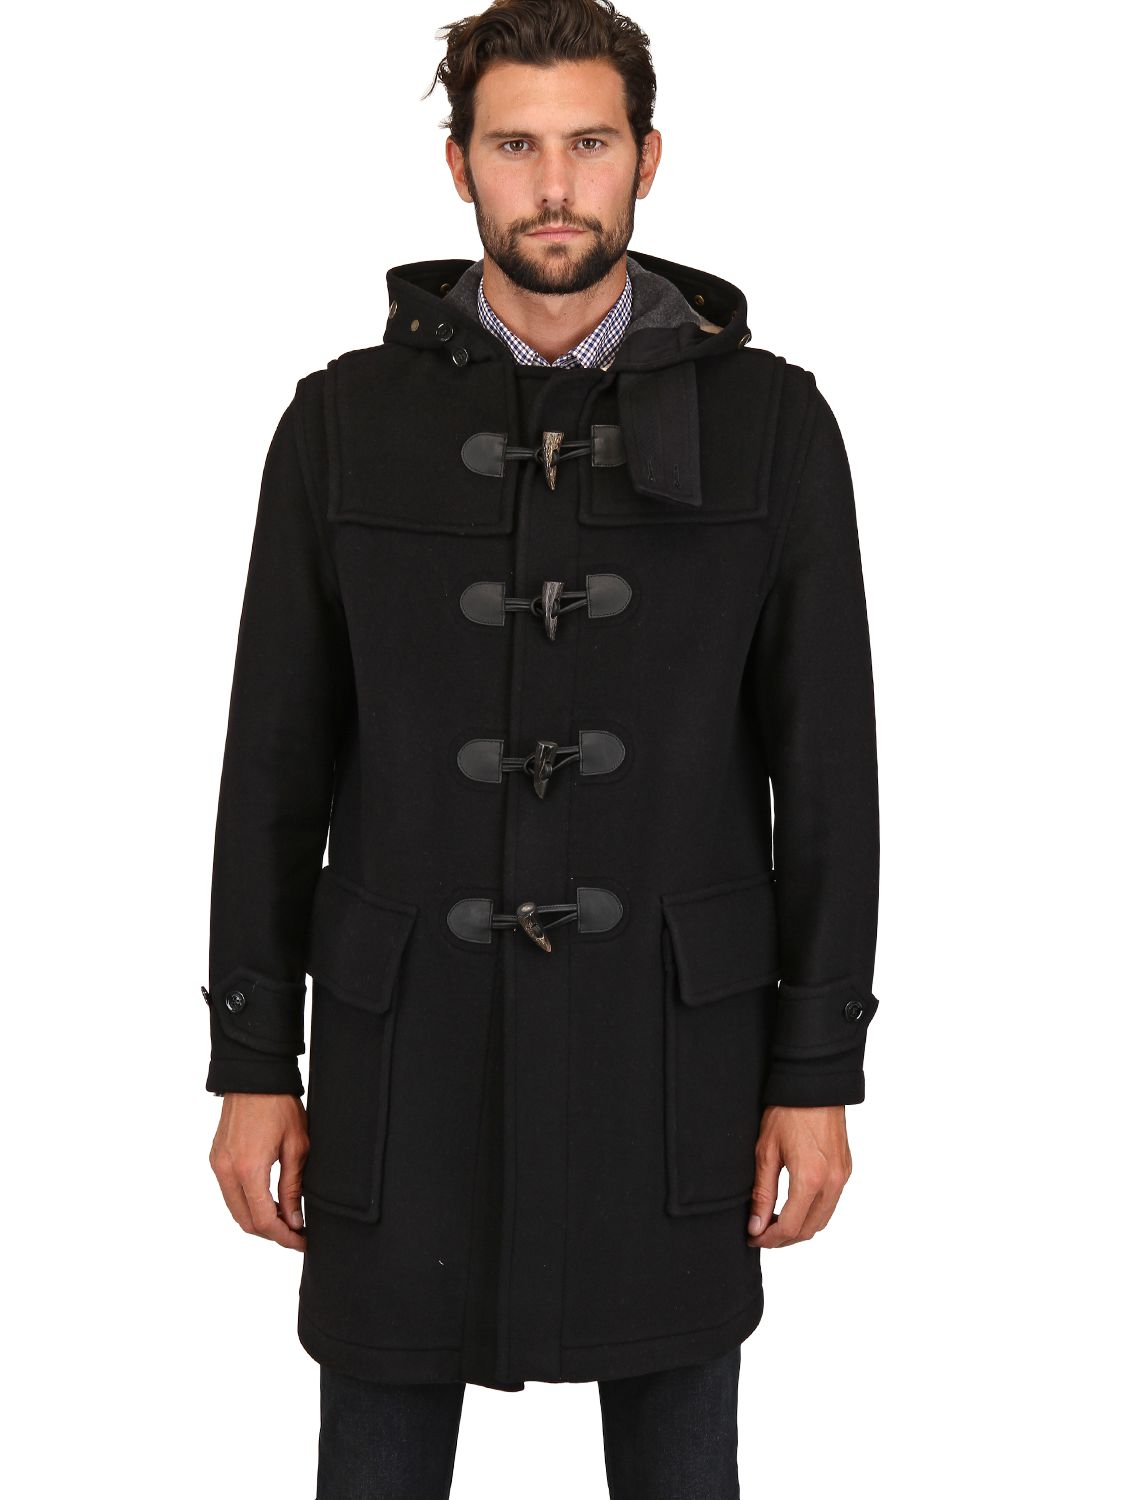 Lyst - Burberry Brit Wool Montgomery Coat in Black for Men